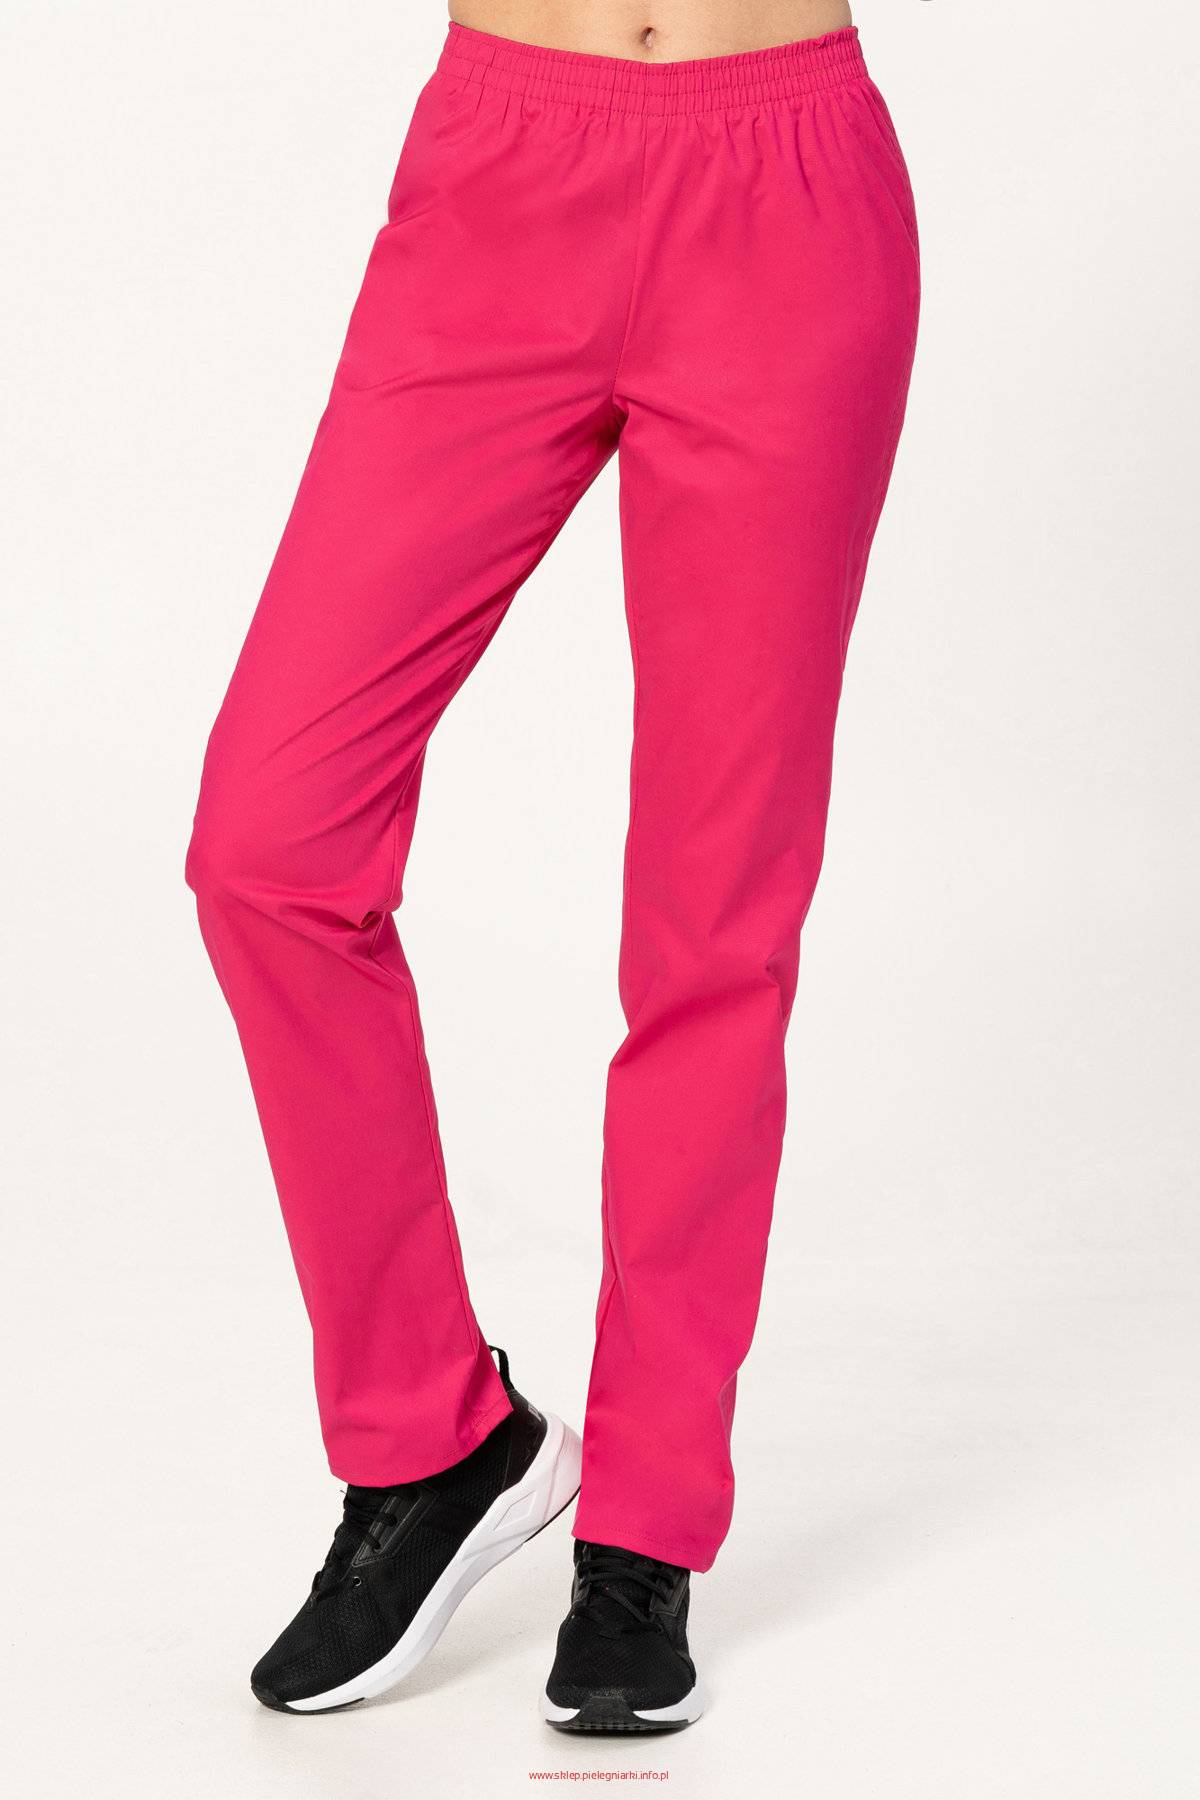 Scrubs / komplet medyczny - bluza + spodnie STRETCH XE7 - różne kolory